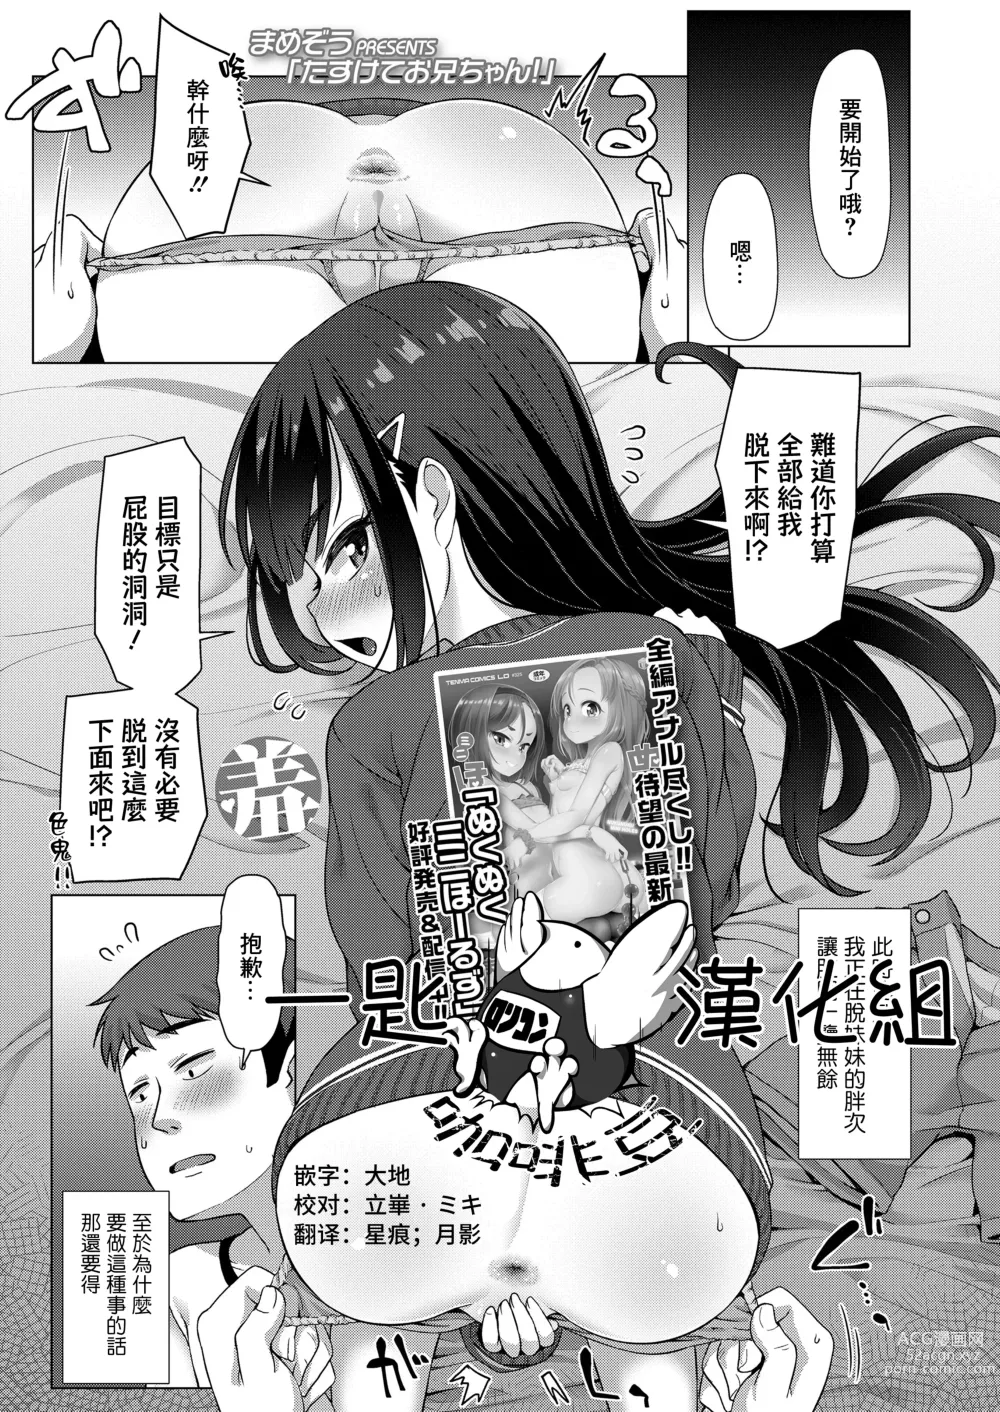 Page 1 of manga Tasukete Onii-chan!